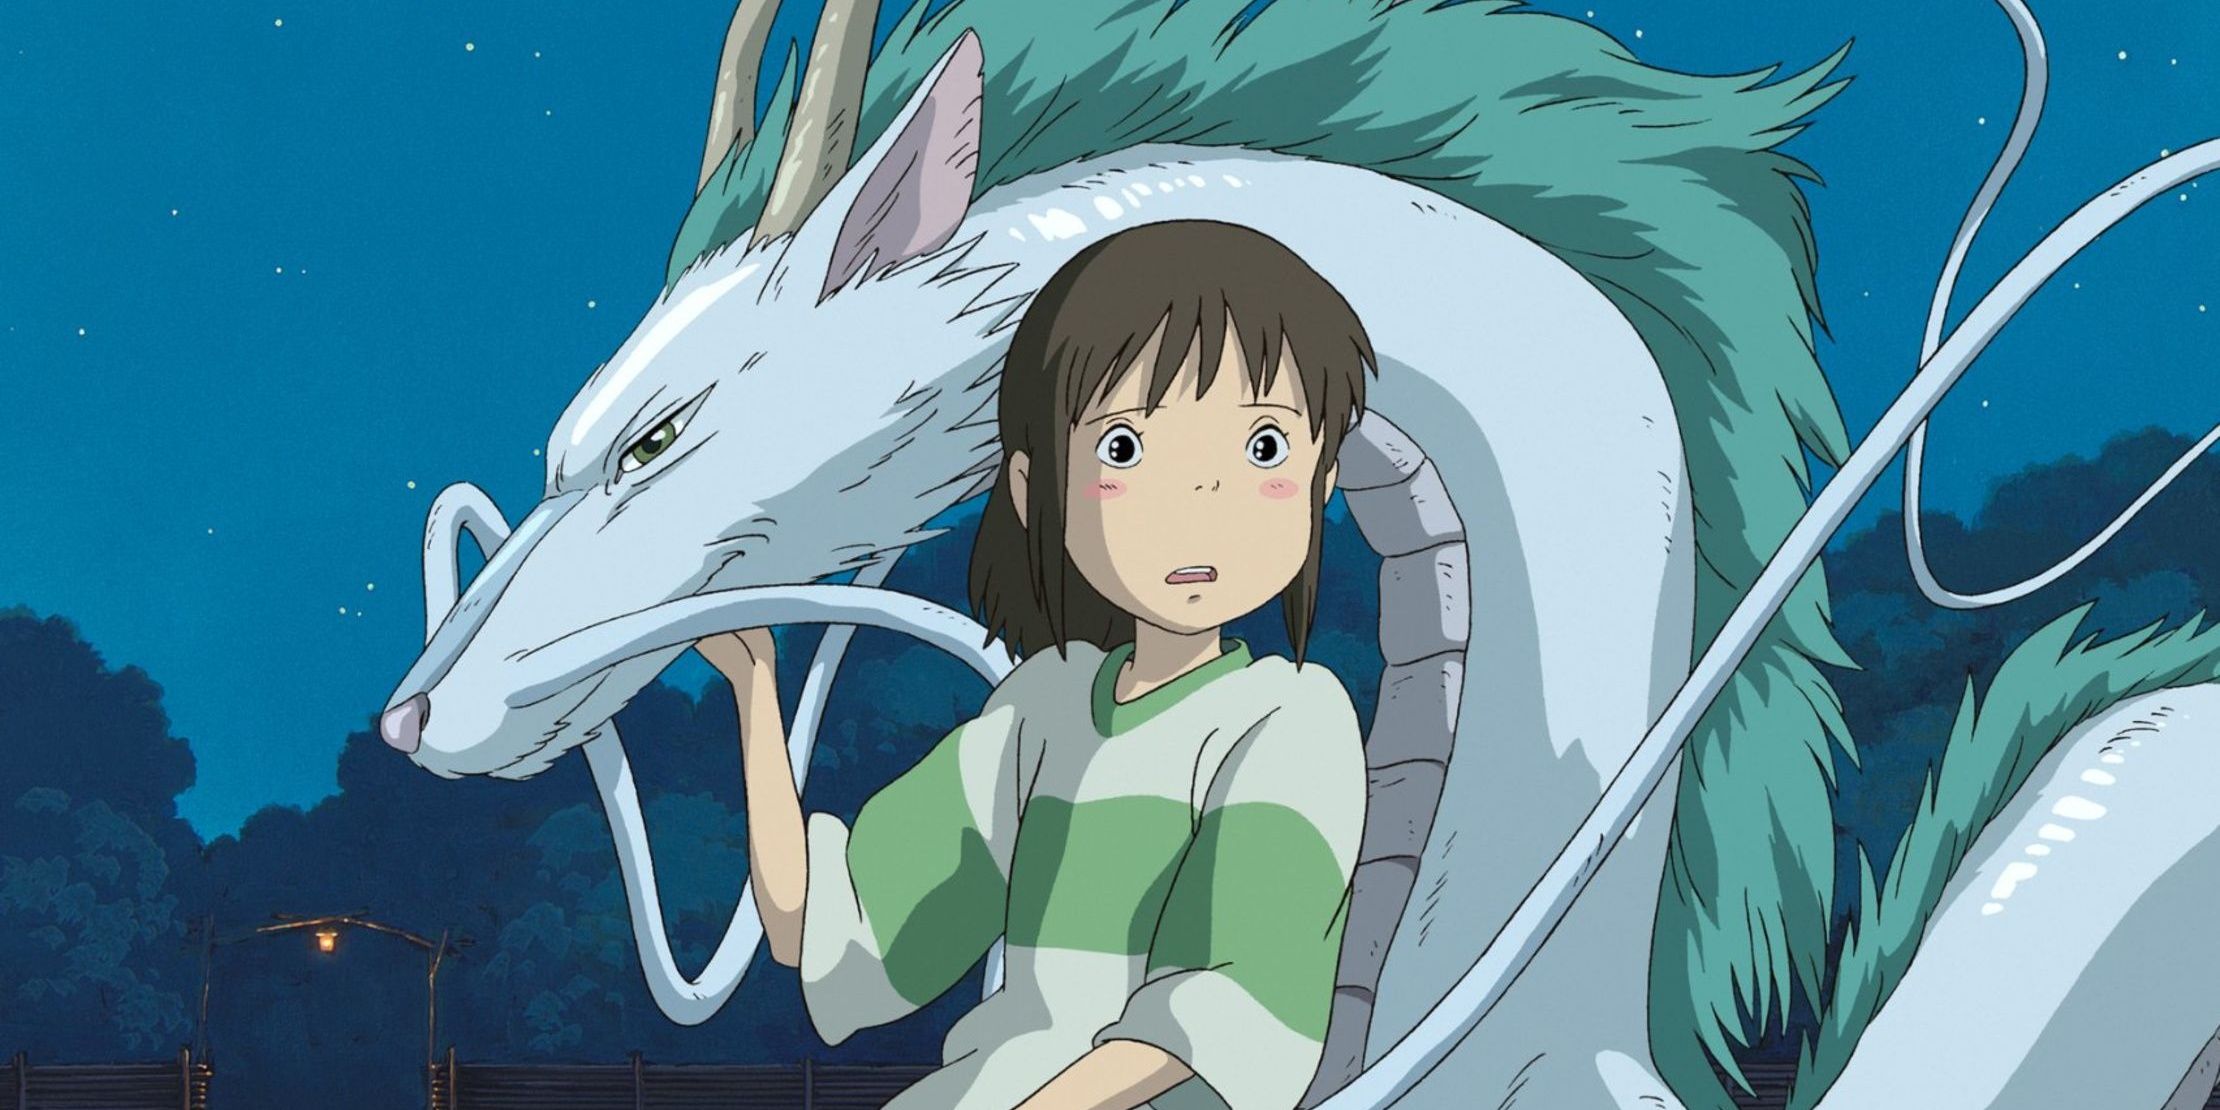 Chihiro holding Haku in his dragon form.